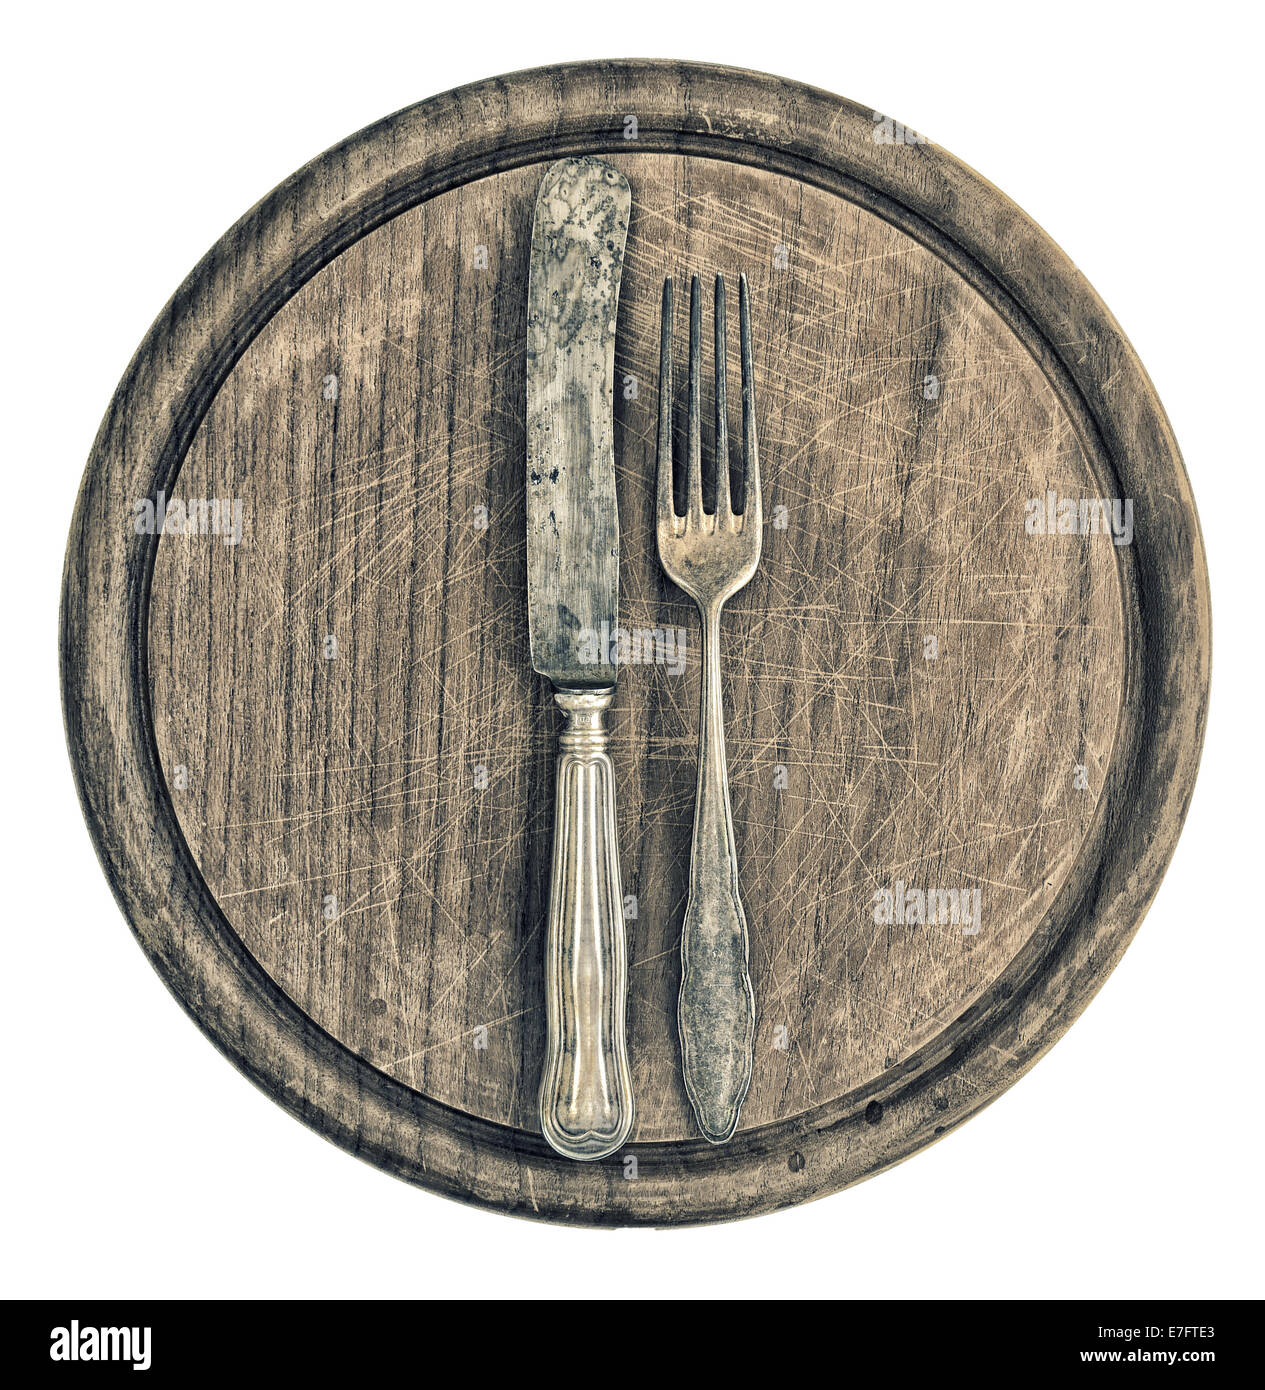 antikes Silberbesteck und rustikalen Holzbrett. Küchenutensilien. Retro-Stil getönten Bild Stockfoto